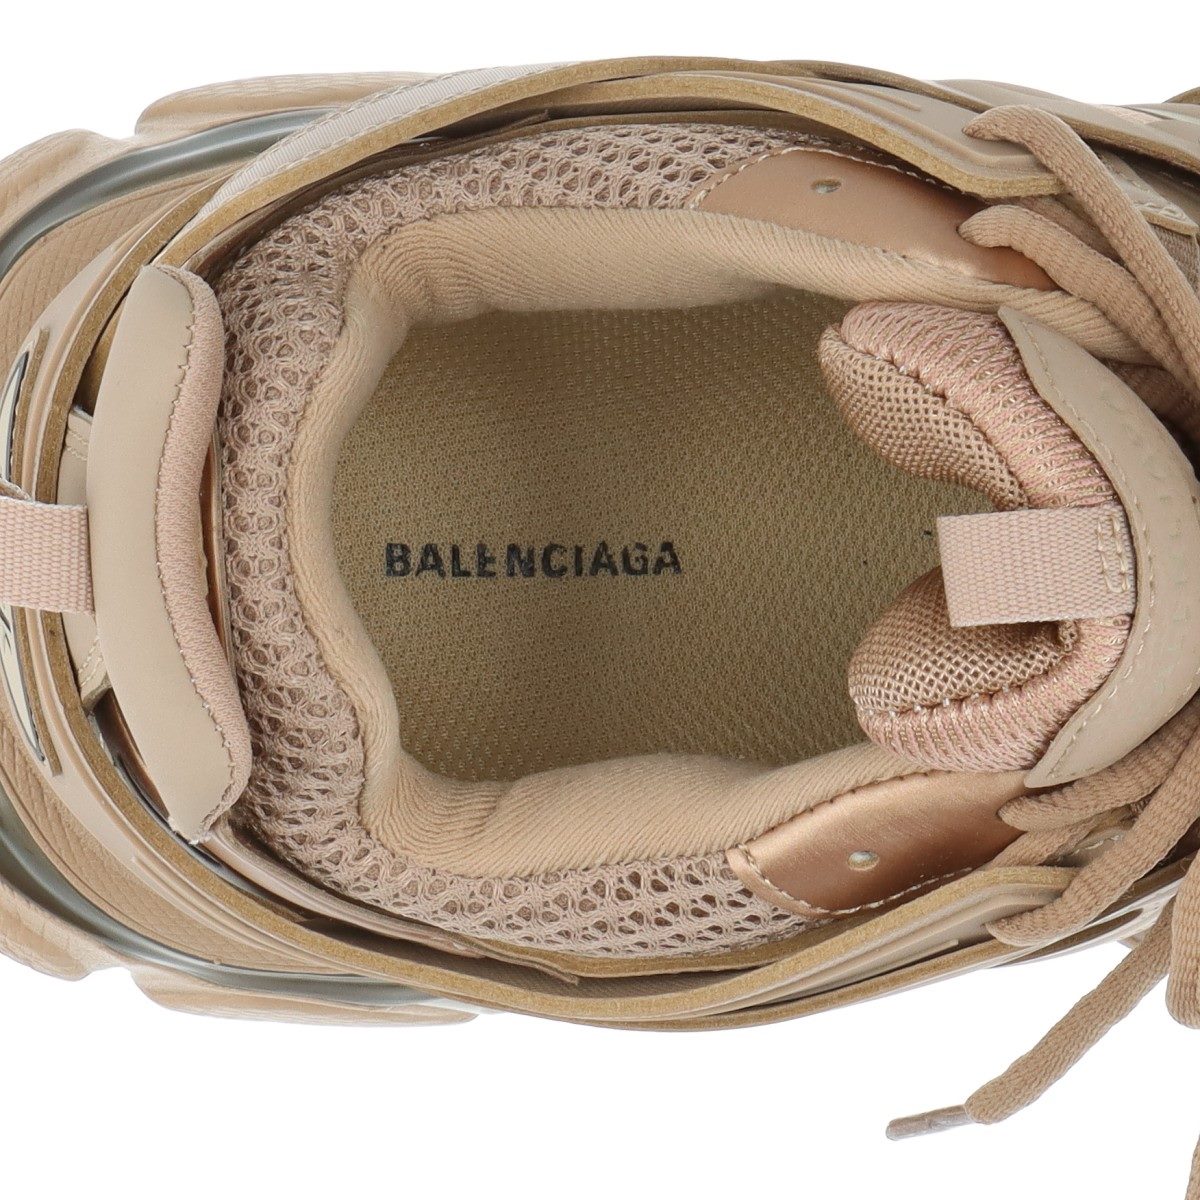 Balenciaga 卡車運動鞋 網眼 x 皮革運動鞋 26.5cm 米色 542023